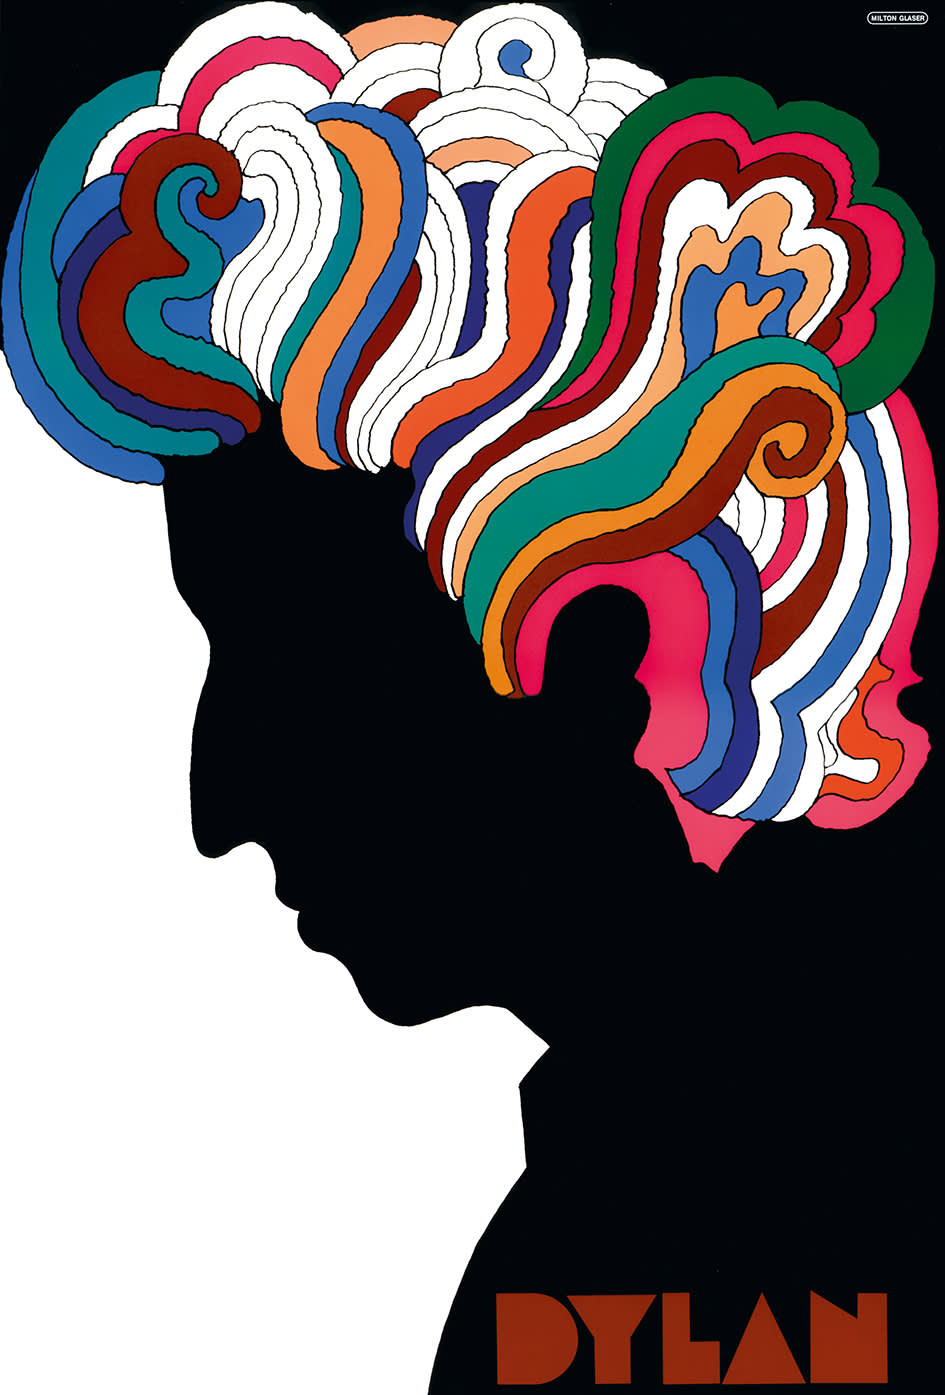  Milton Glaser, Bob Dylan Poster, 1967 